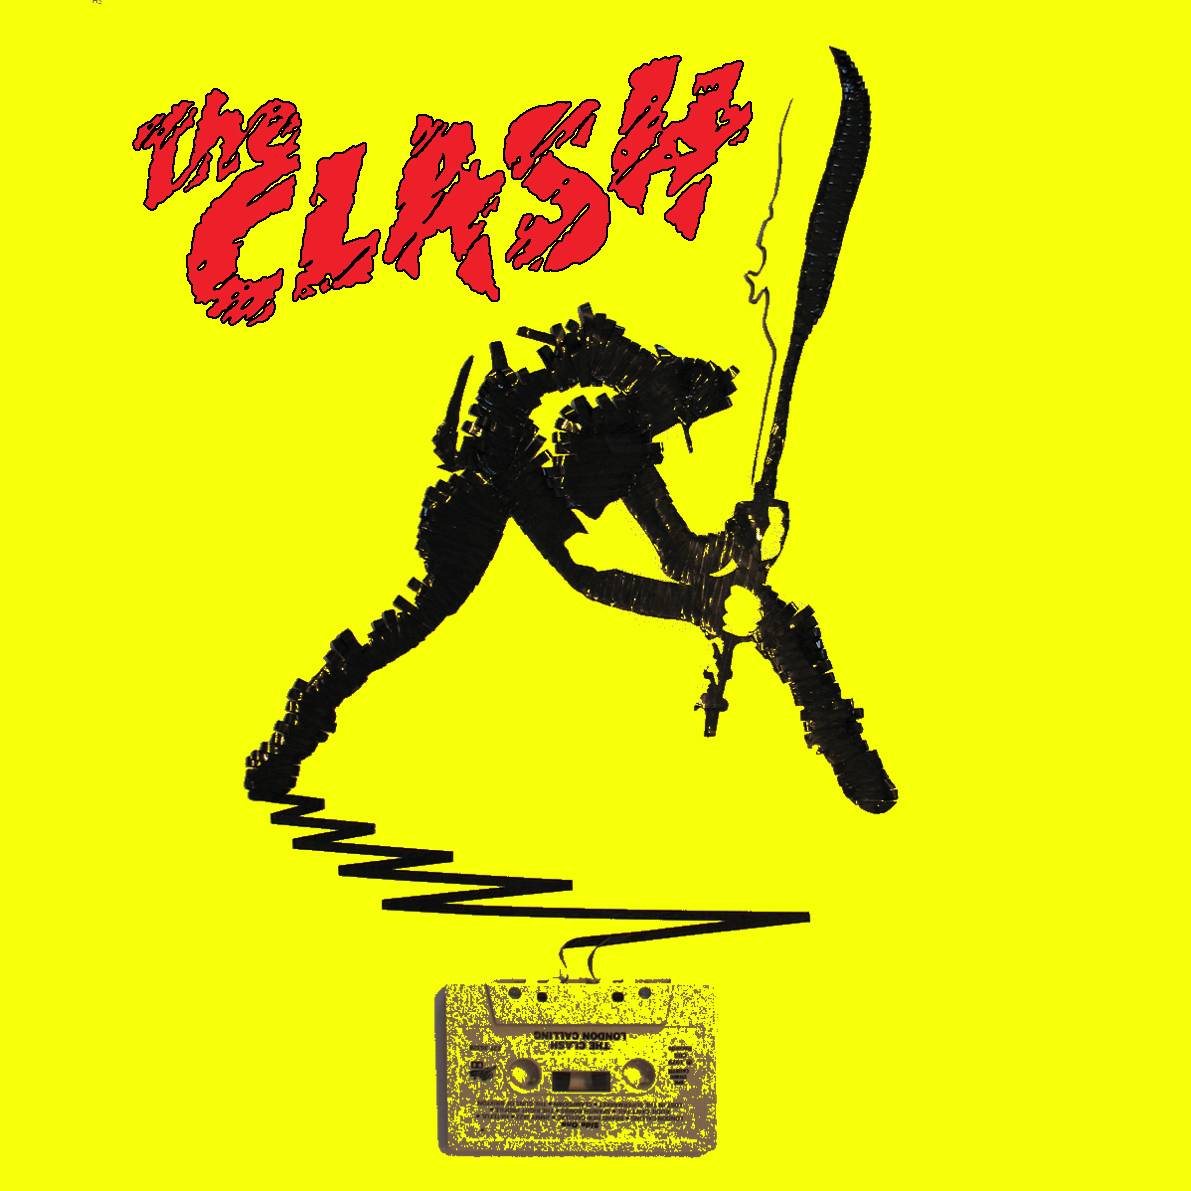 The Clash Wallpaper, Adorable 27 The Clash Photo HQFX. Fungyung